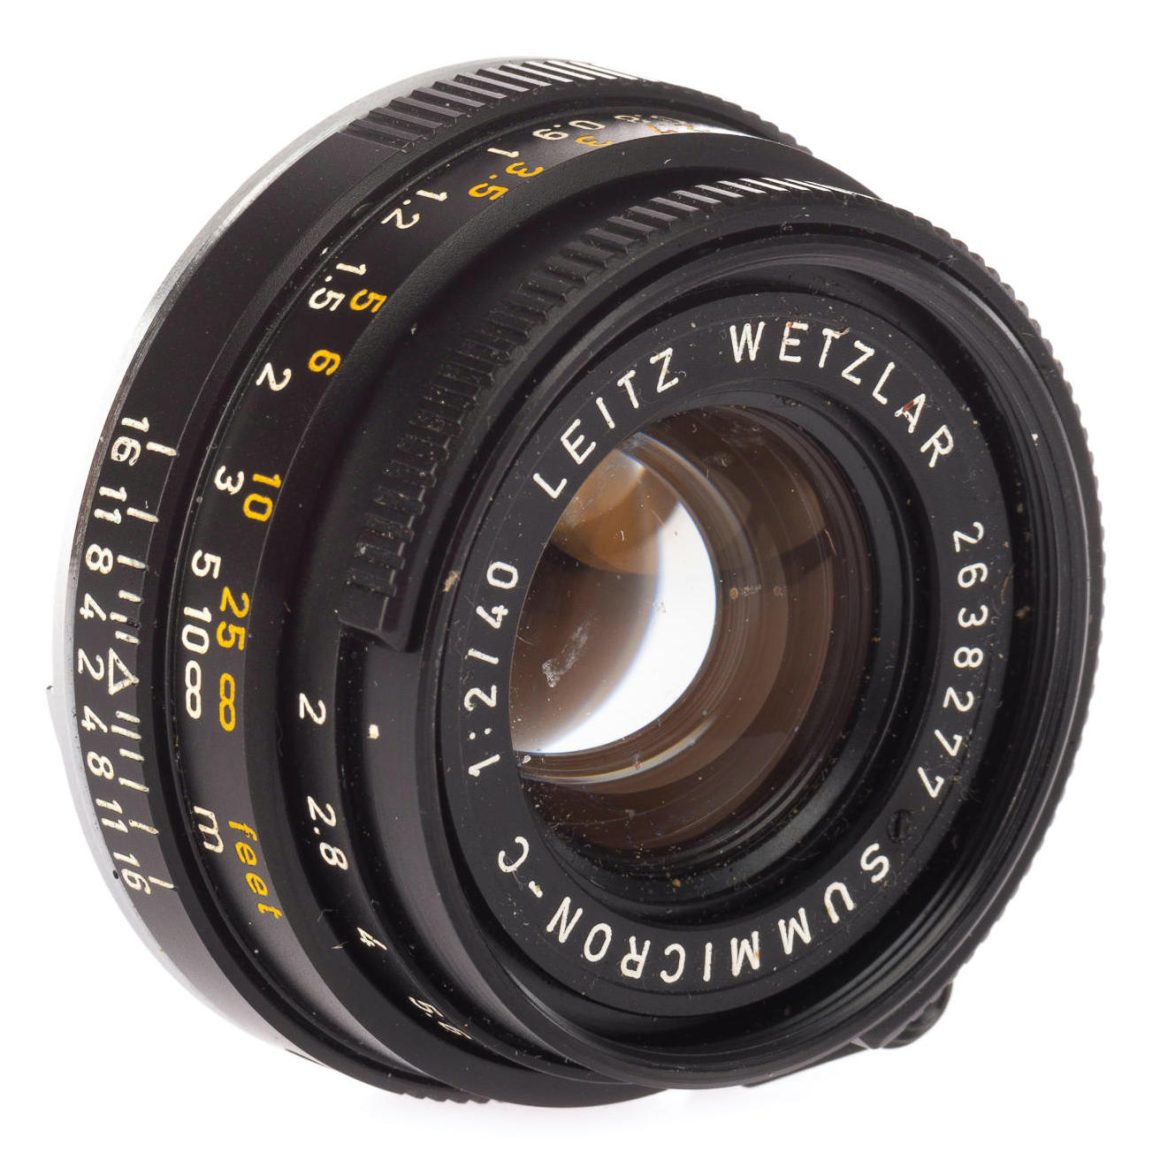 Leitz Wetzlar SUMMICRON-C 40mm F/2 | LENS-DB.COM